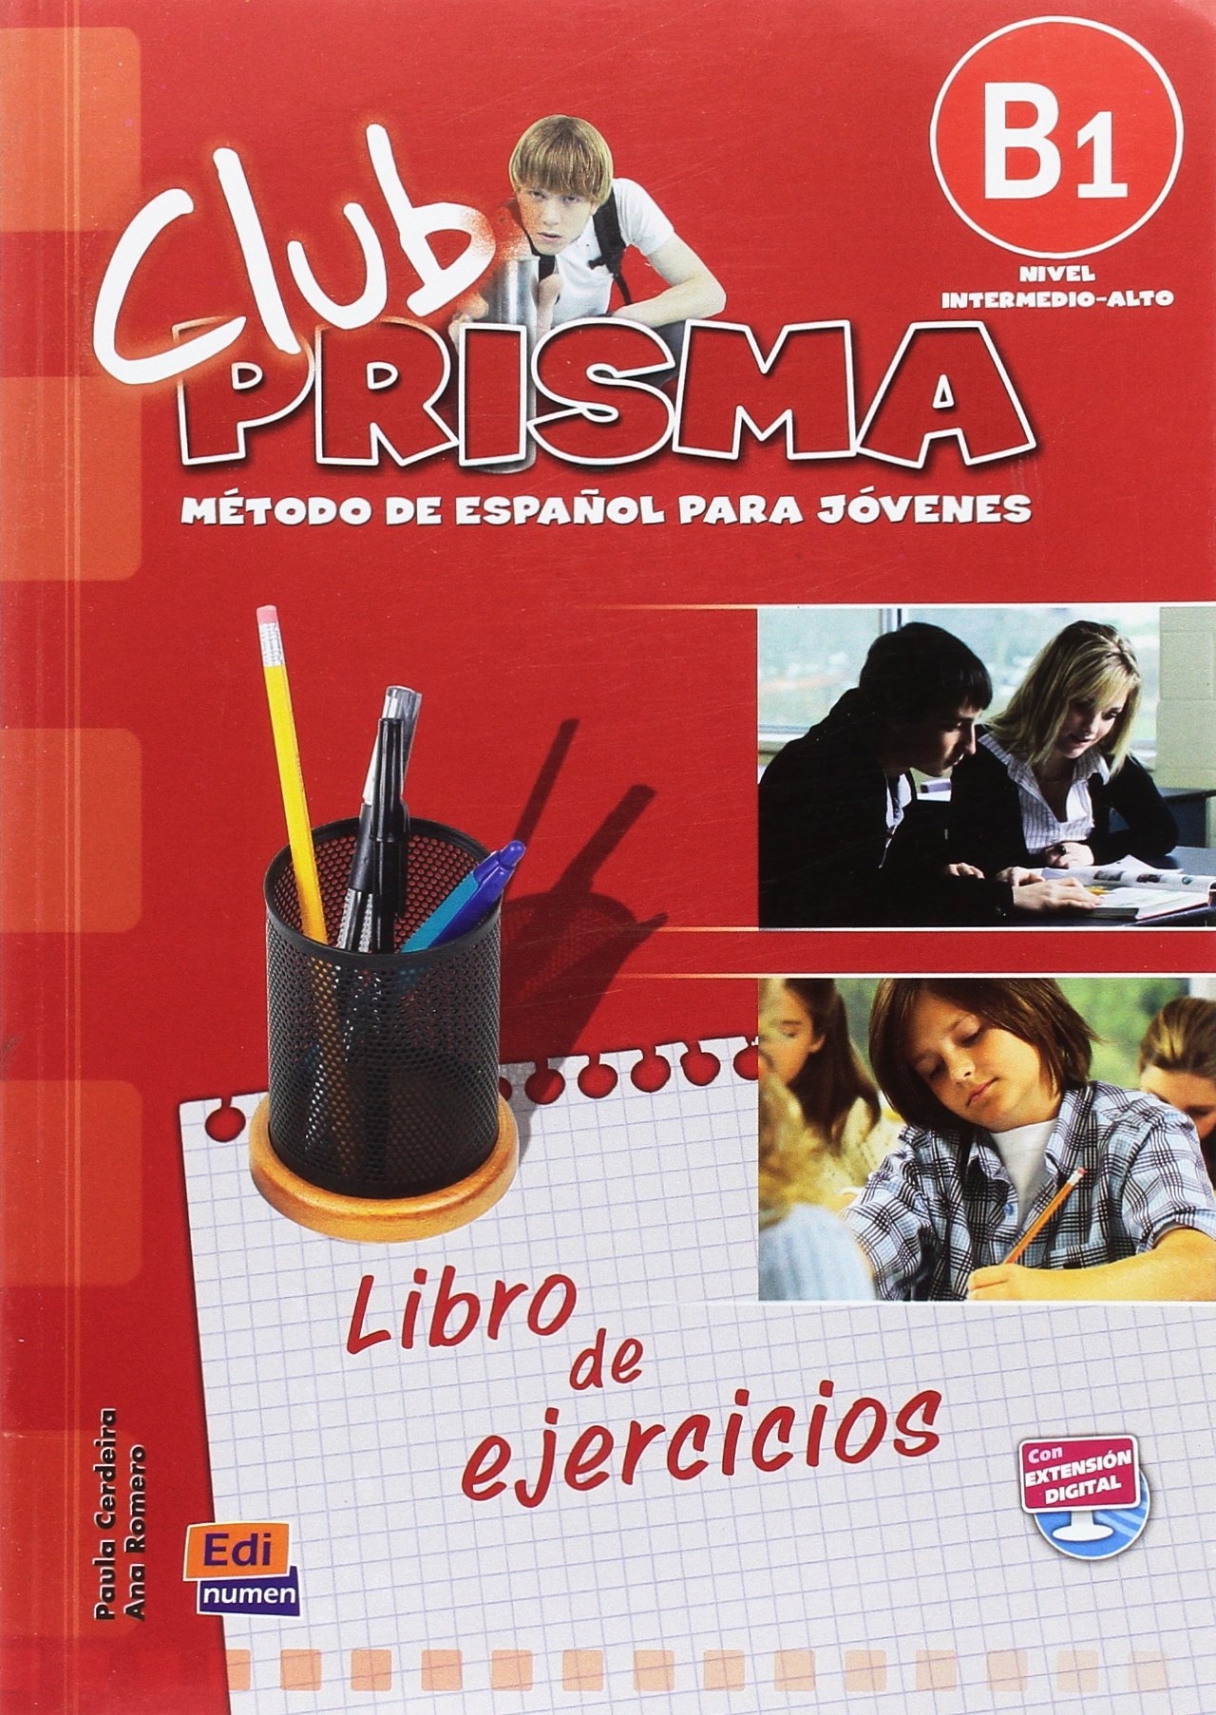 Координатор проекта: Maria Jose Gelabert Club Prisma Nivel B1 - Libro de ejercicios 